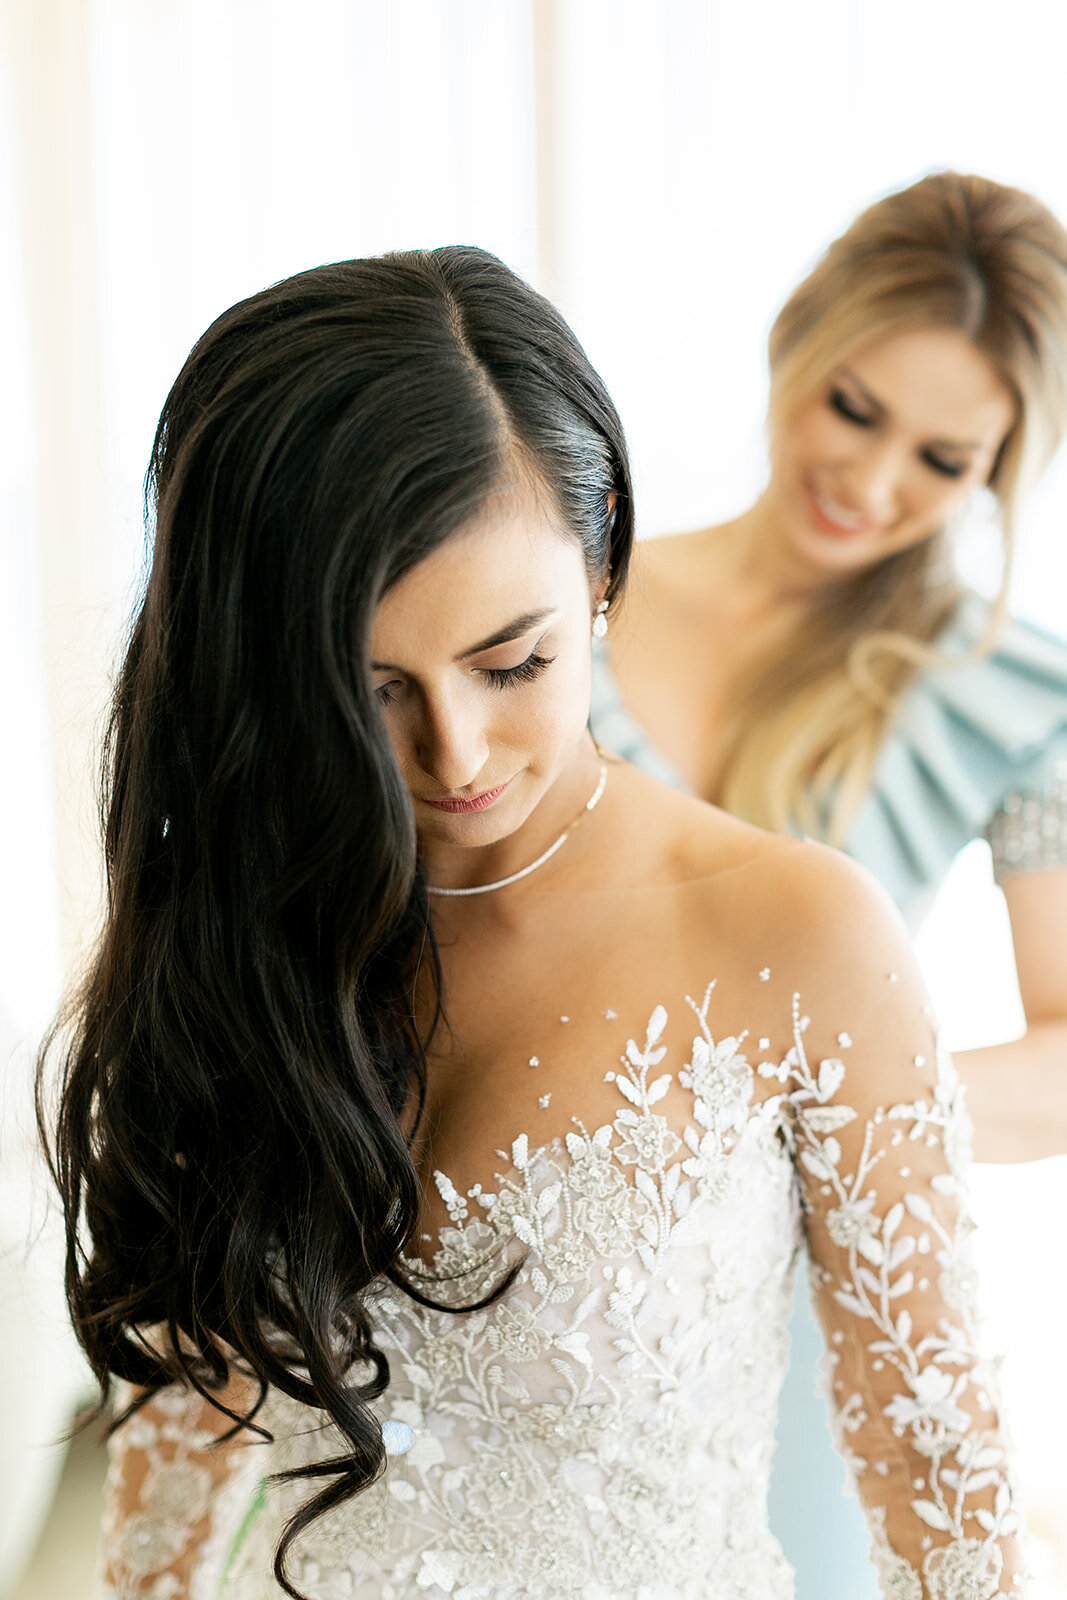 Levi & Amelia's Wedding - Natalie Schutt Photography - Getting Ready-55_websize.jpg